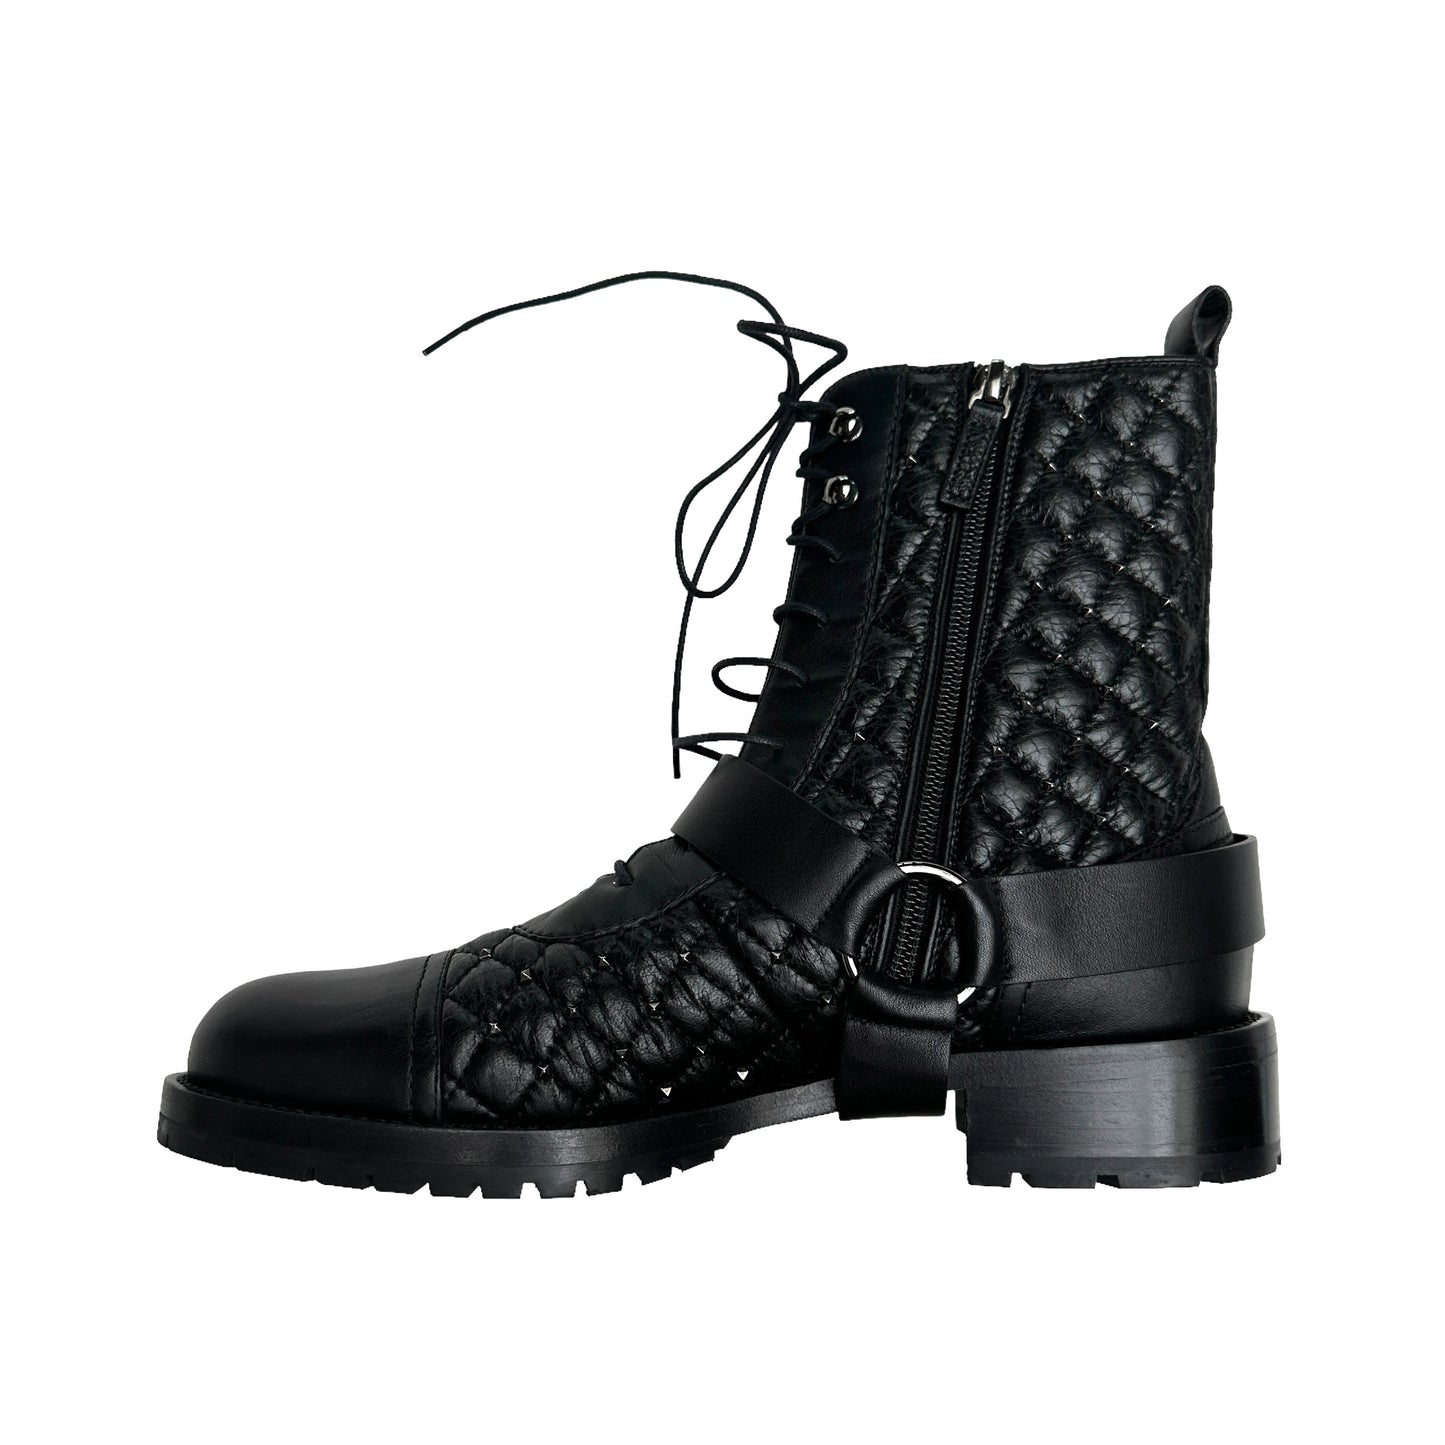 Black Studded Combat Boots - 8.5